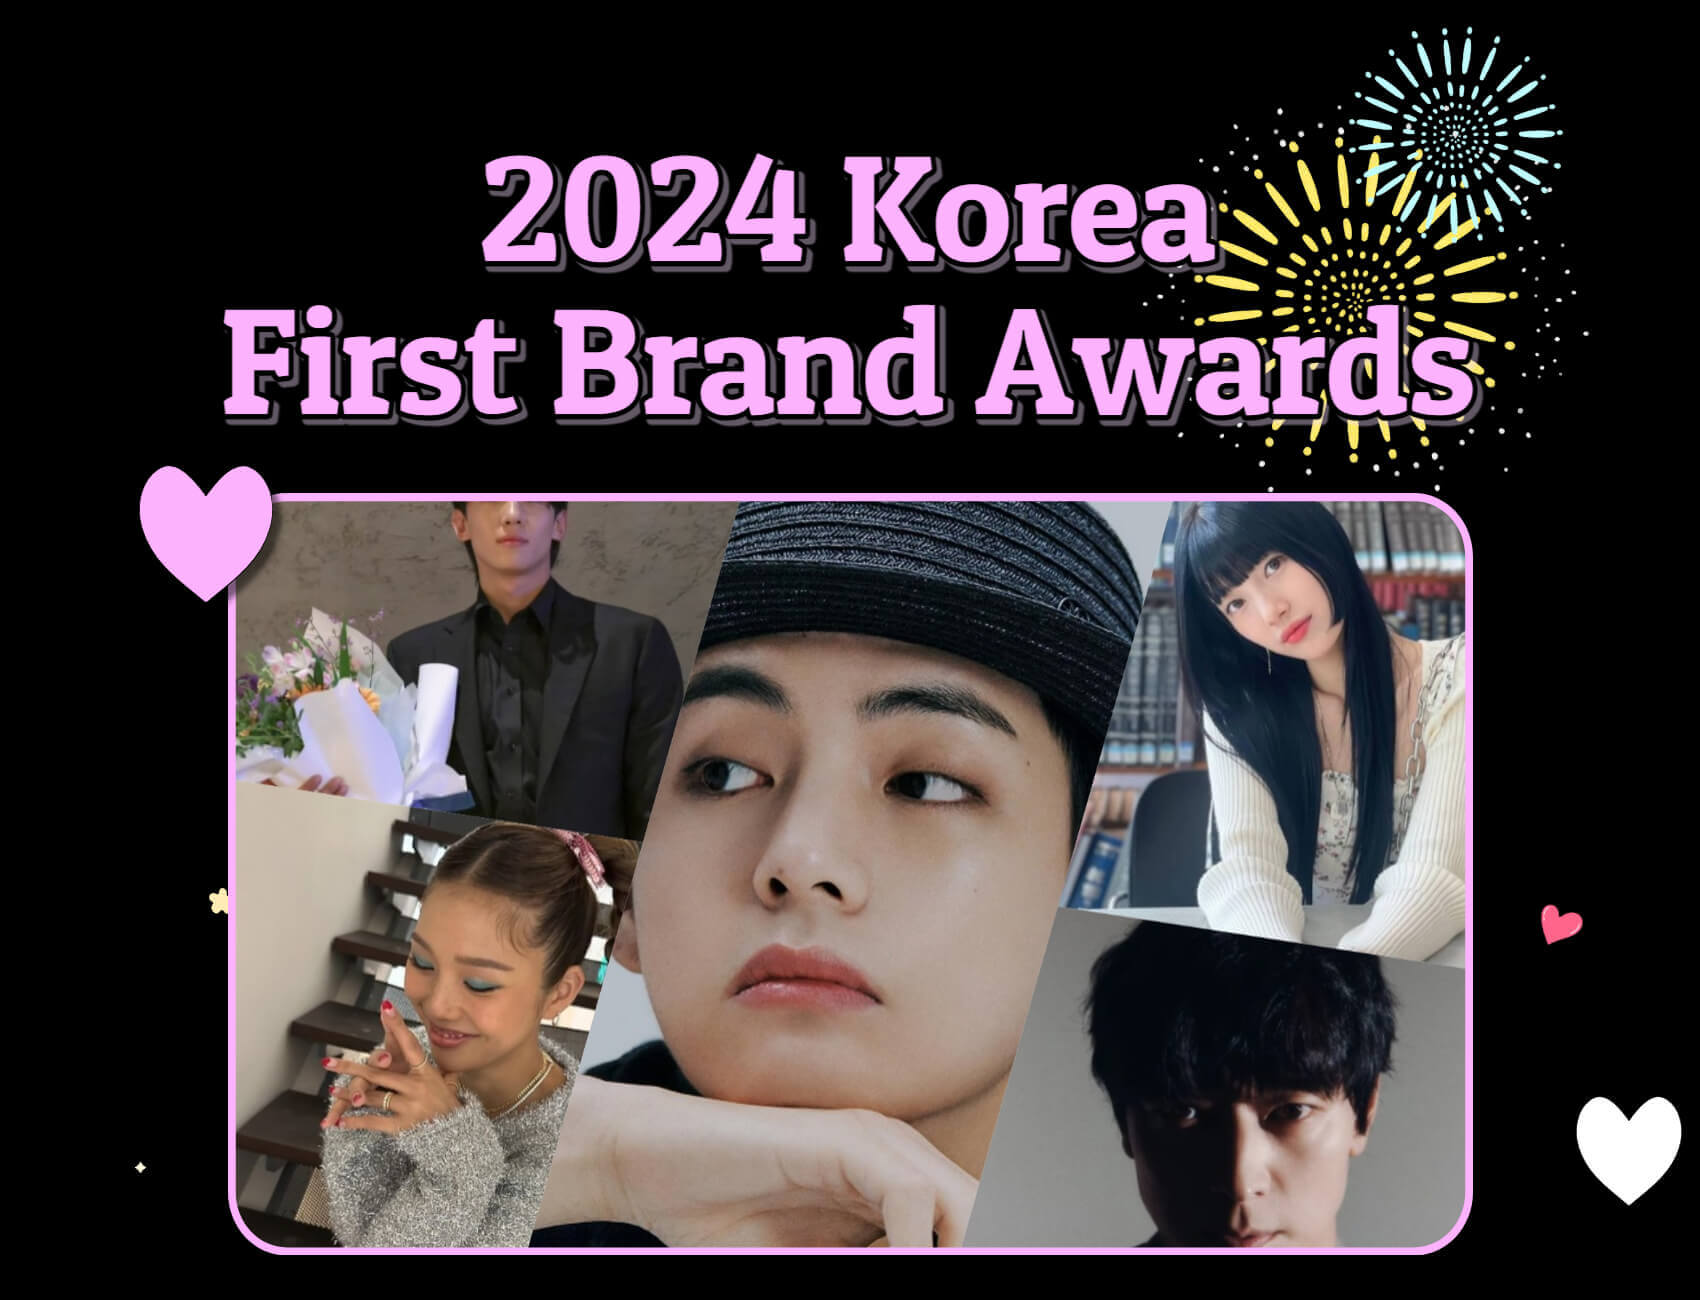 [Full Winners List] The winners of the Korea First Brand Awards 2024